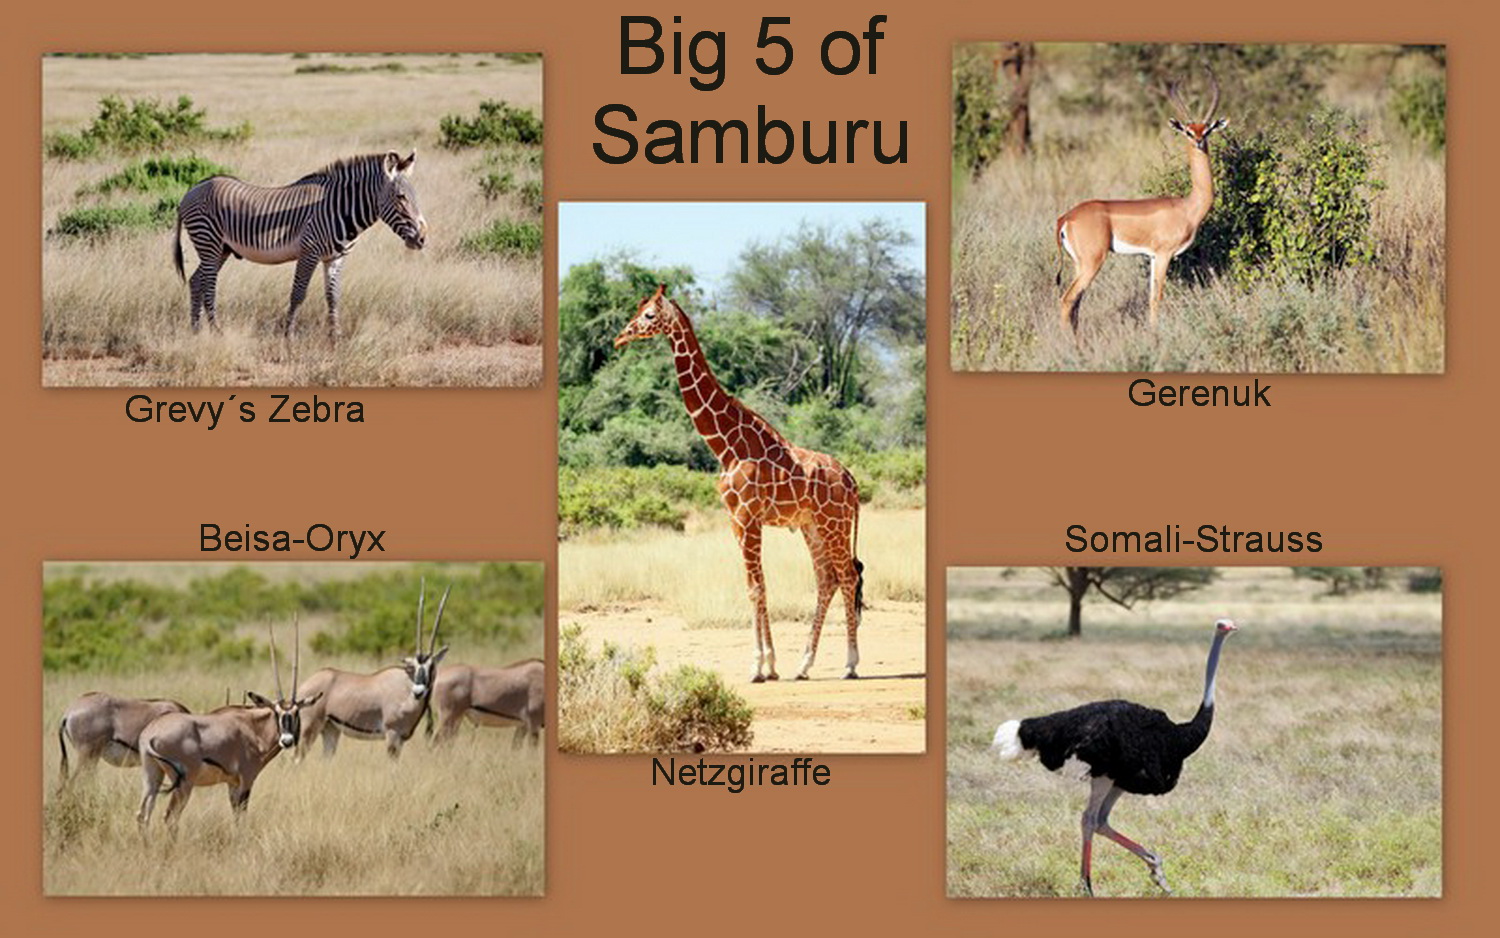 Big 5 of Samburu